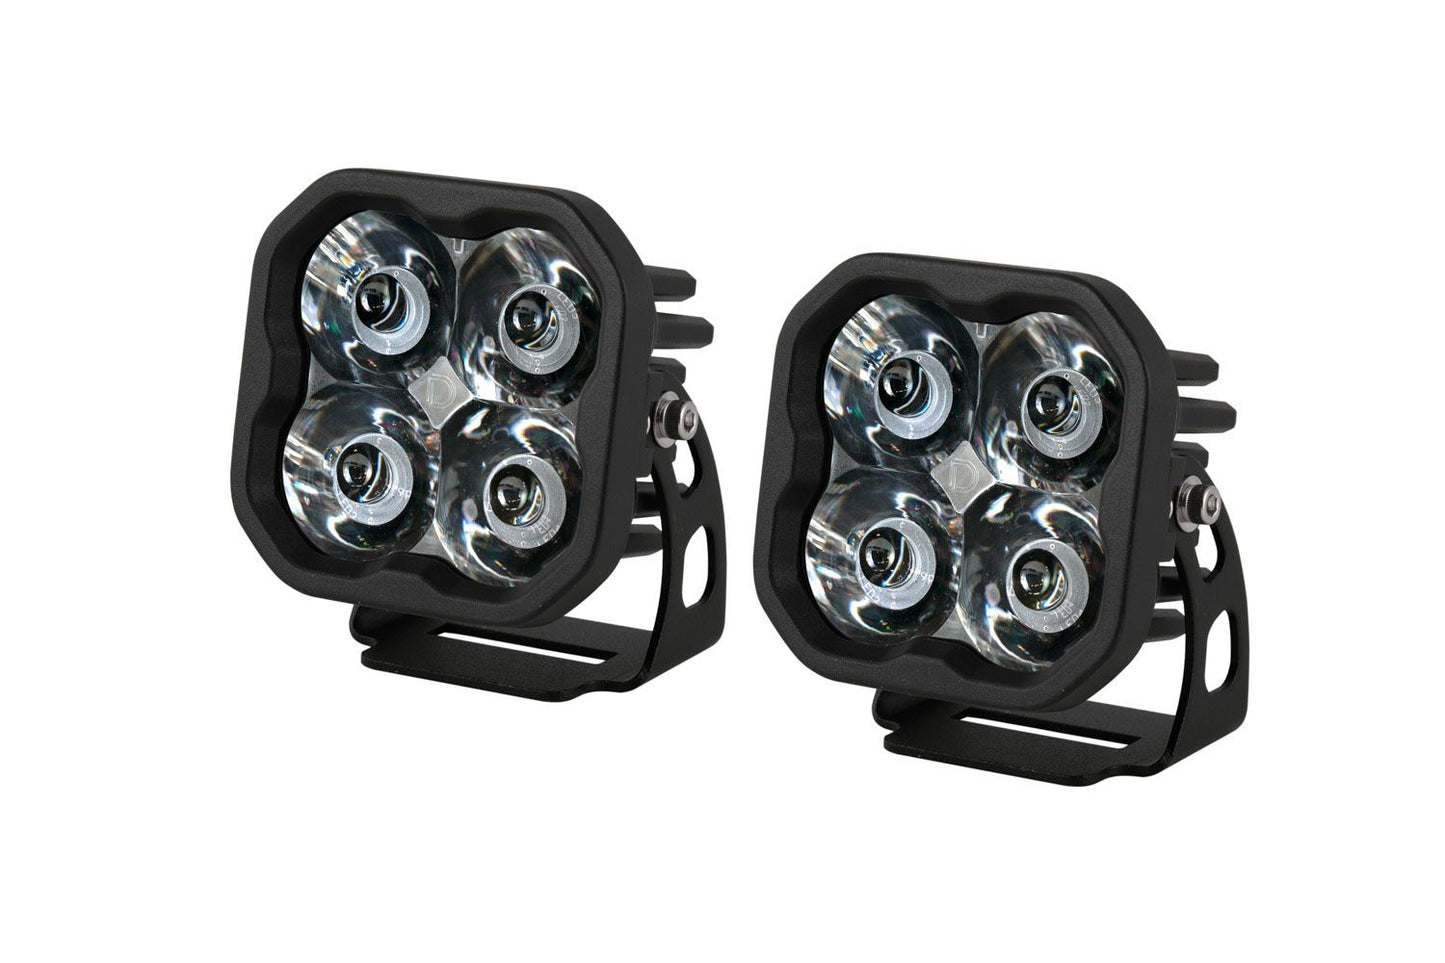 Diode Dynamics Stage Series 3" SAE/DOT White Sport LED Pod (pair)